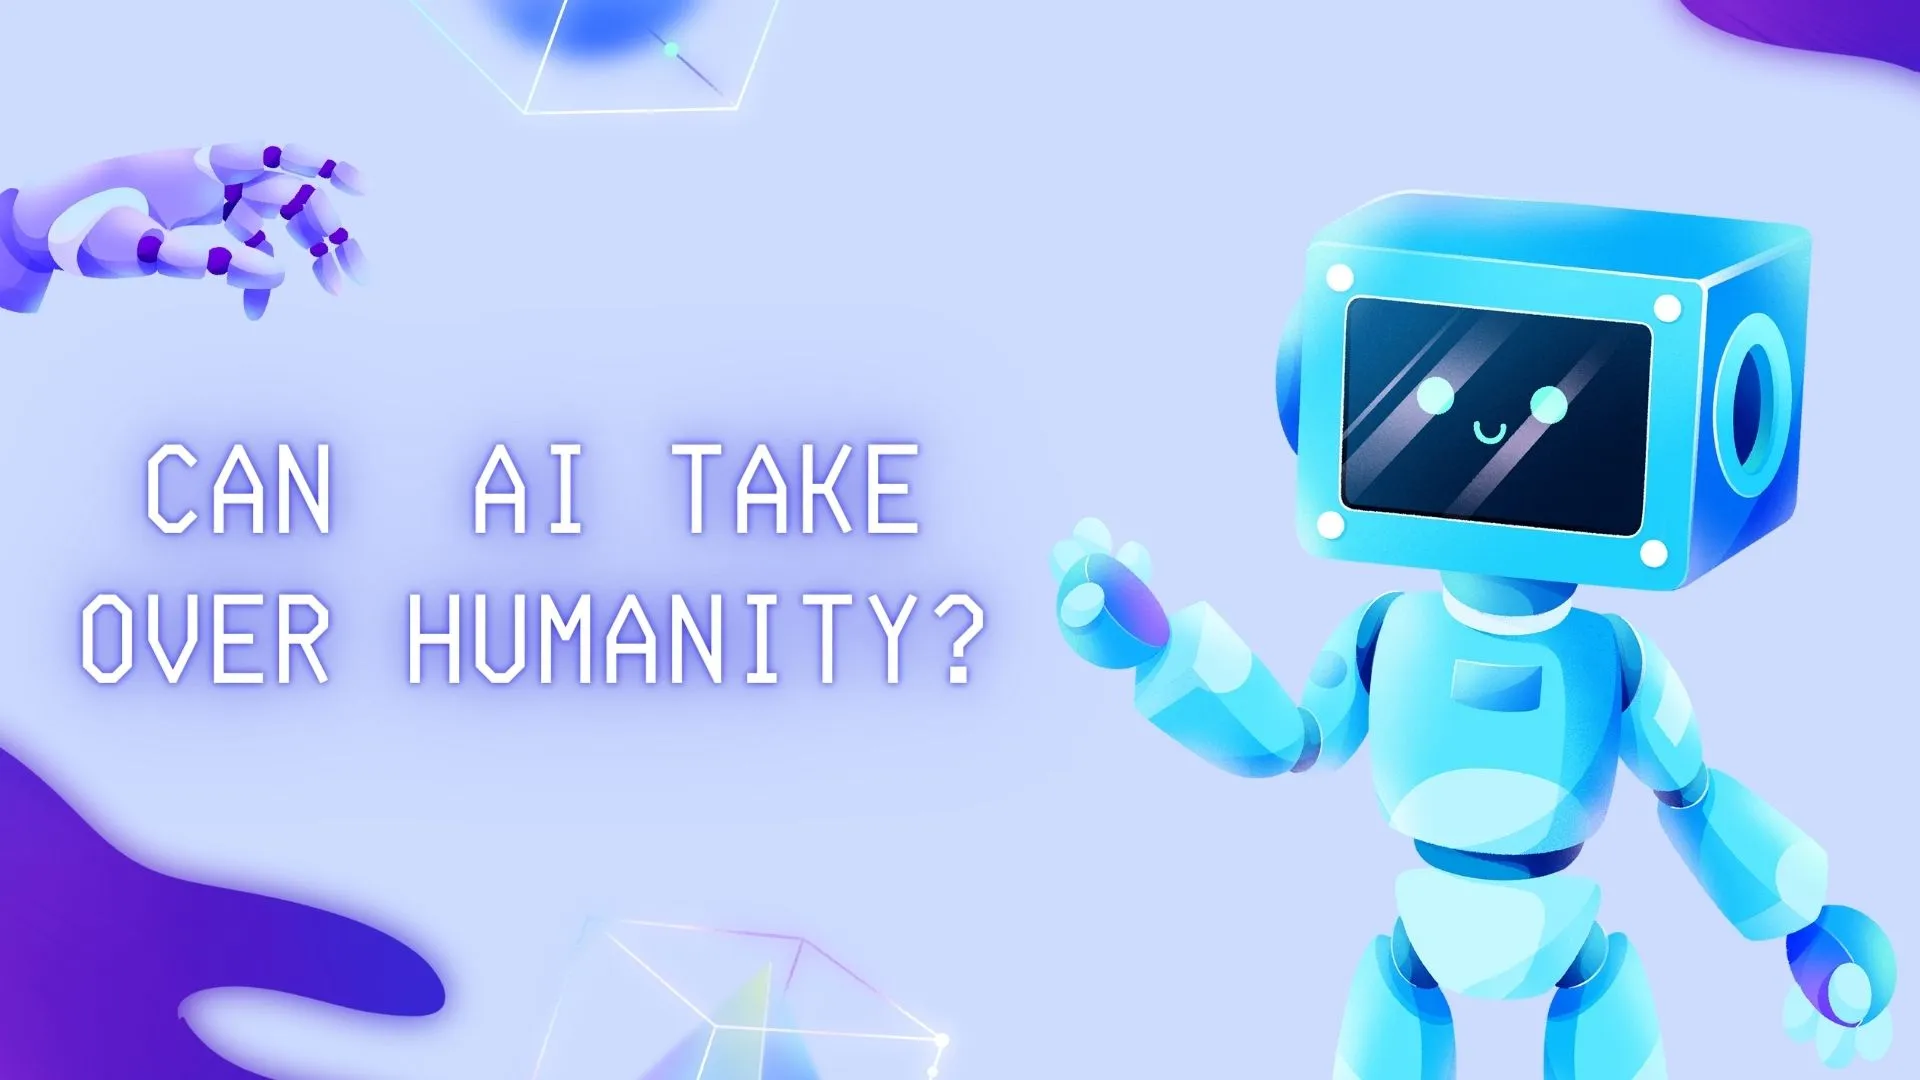 Can technology like AI take over humanity